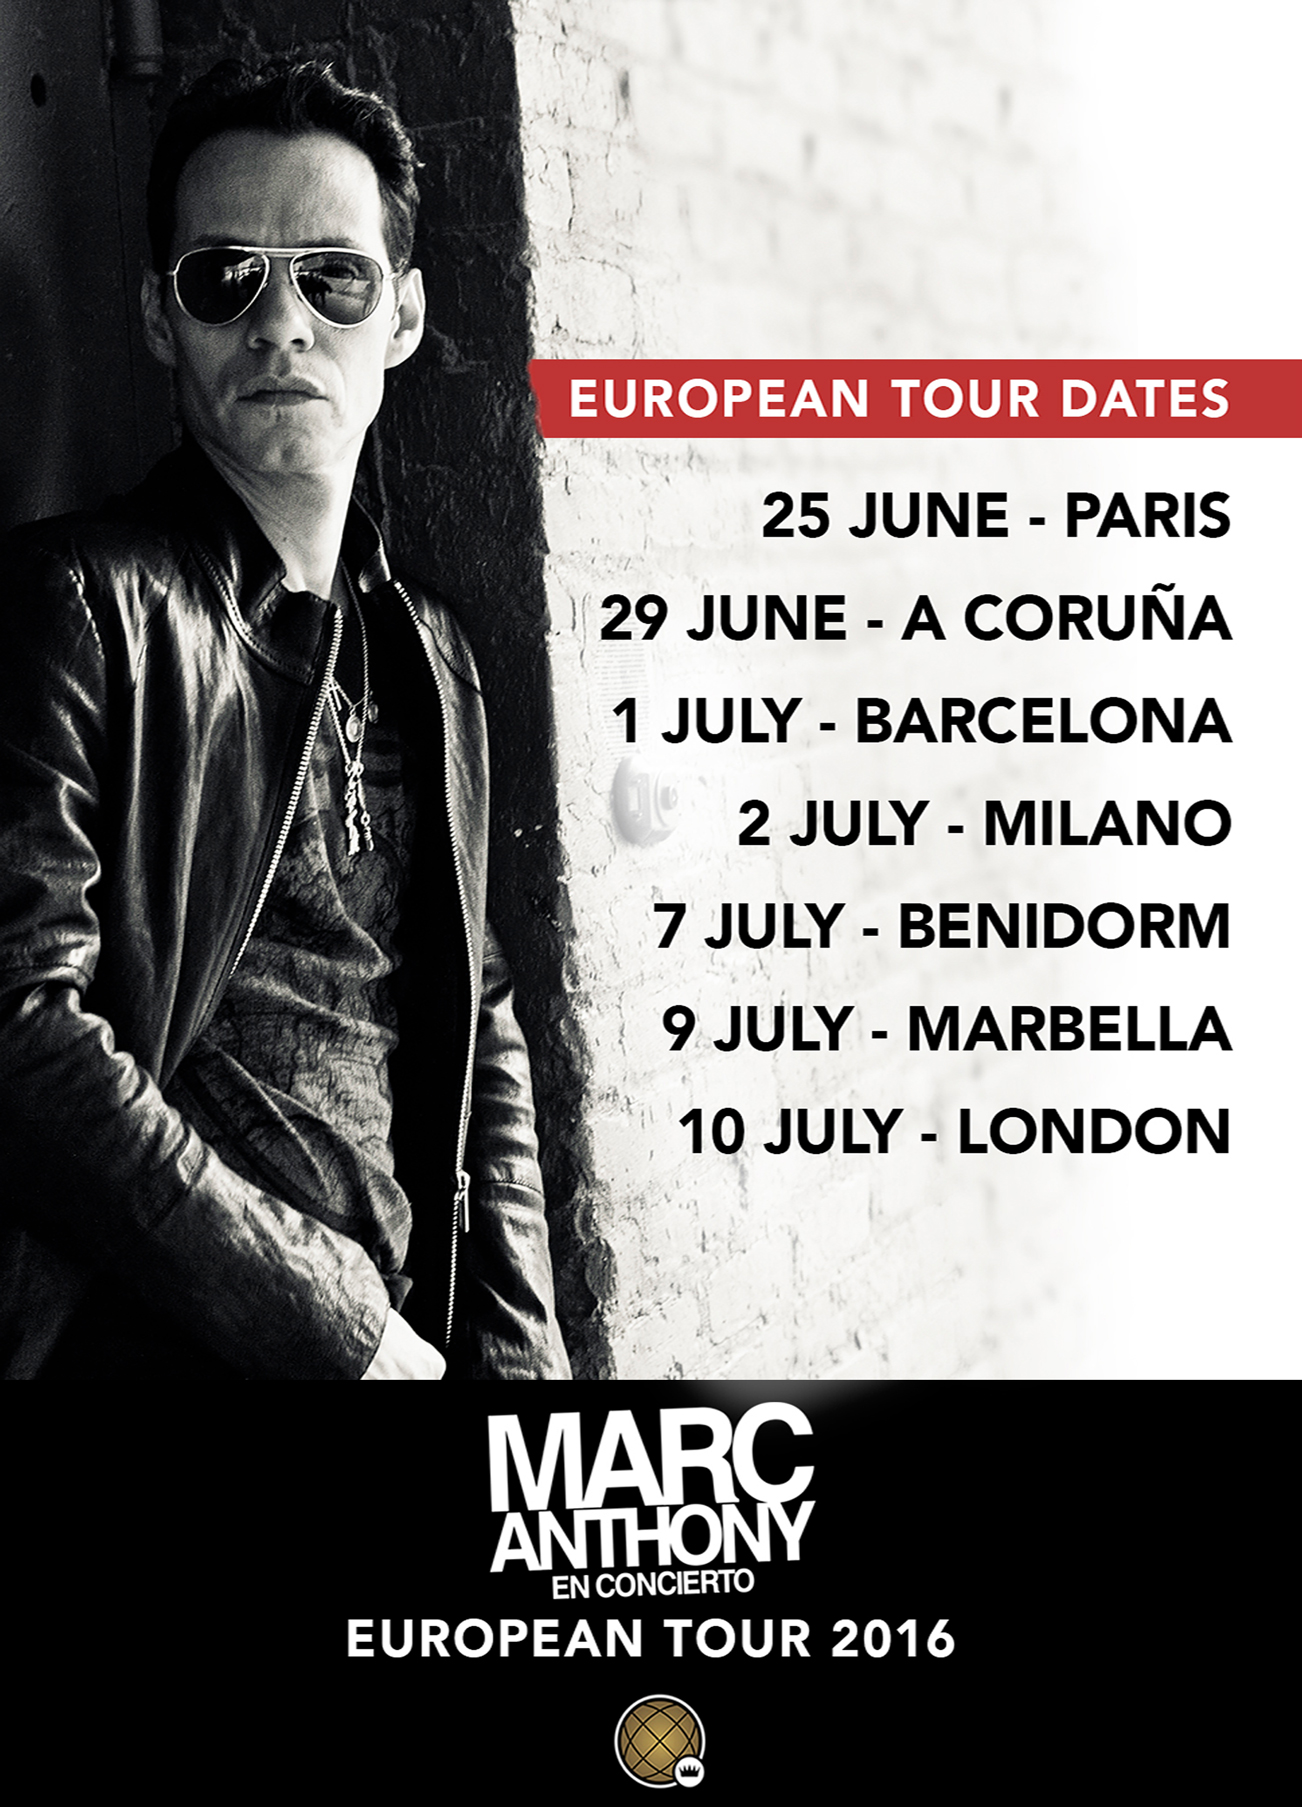 Marc Anthony regresa a Europa!